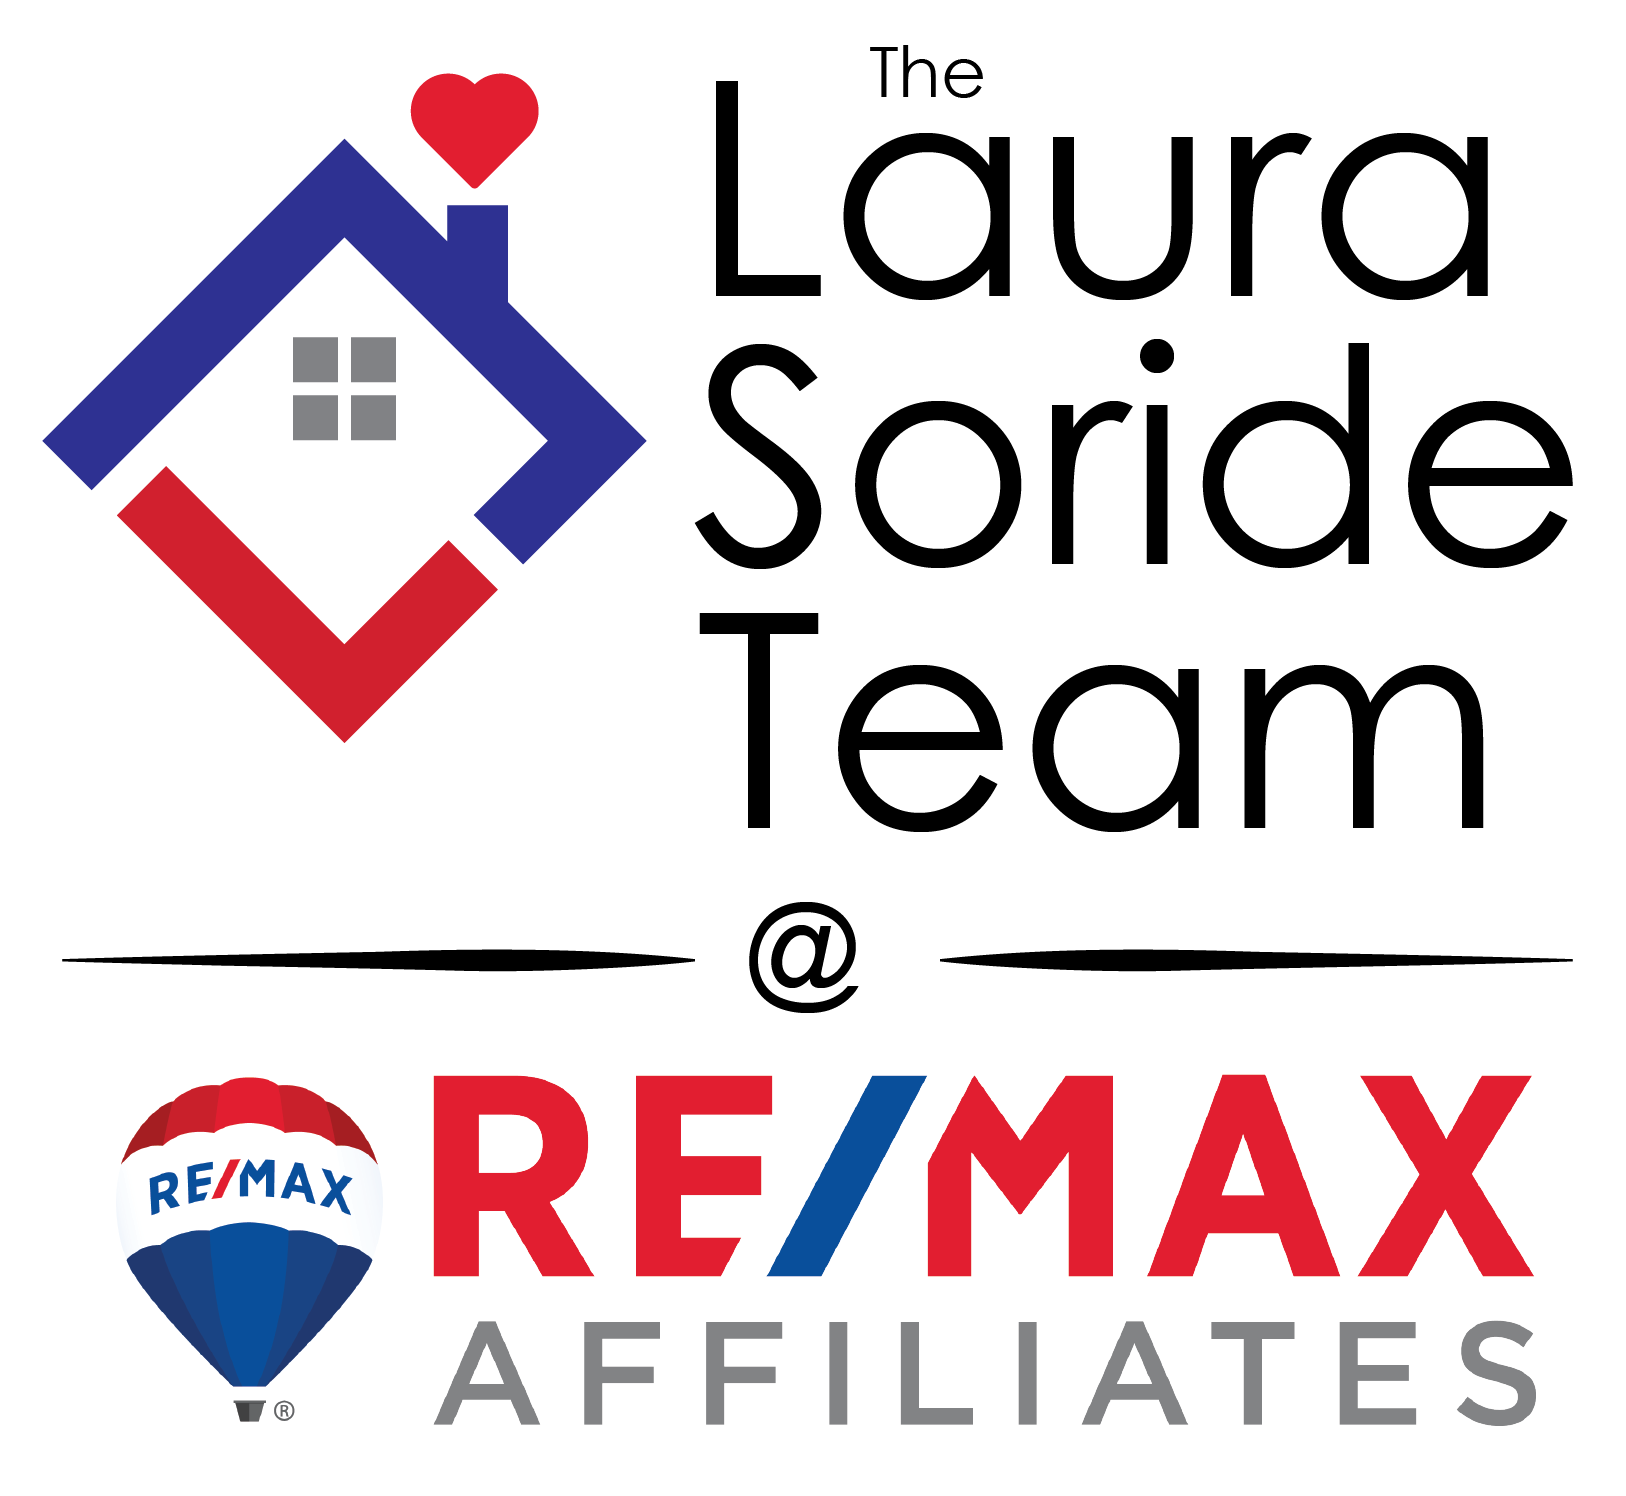 LST @ REMAX Affiliates Logo (1).png